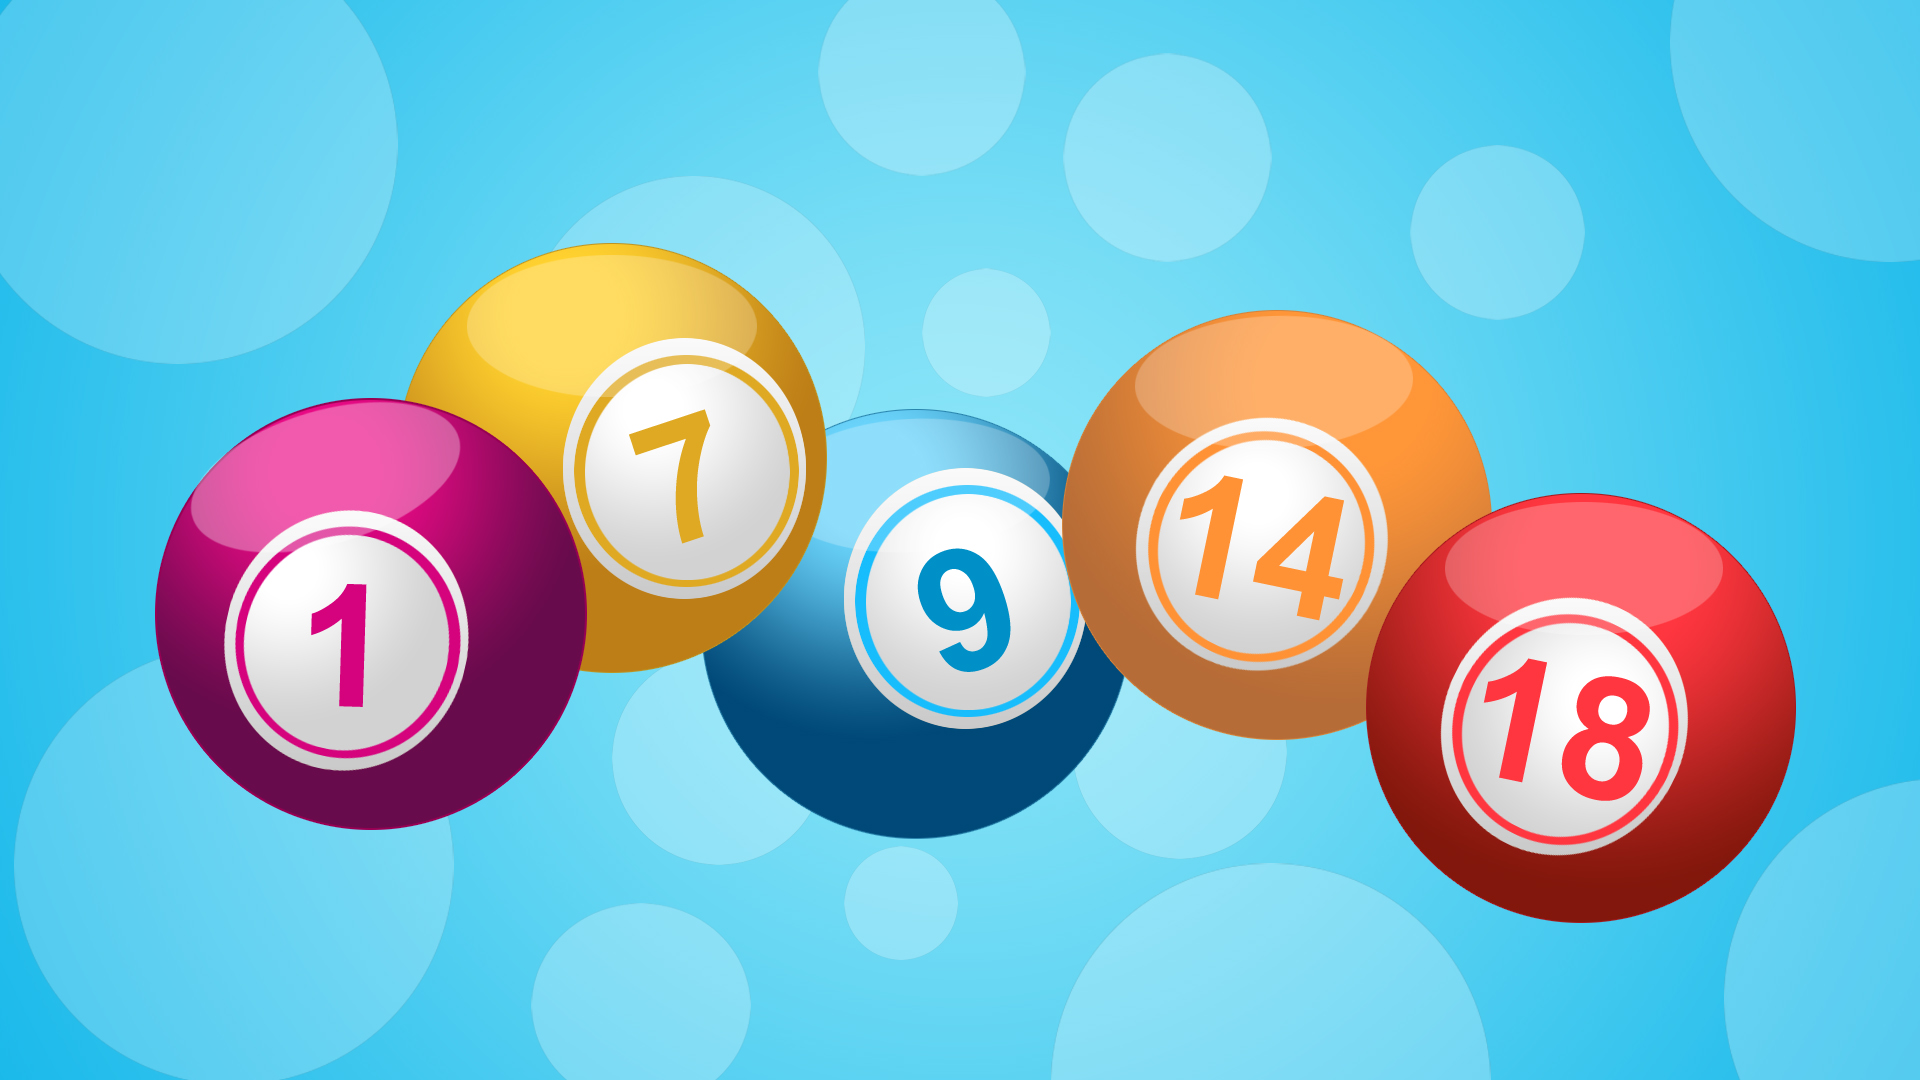 free clipart of bingo balls - photo #6